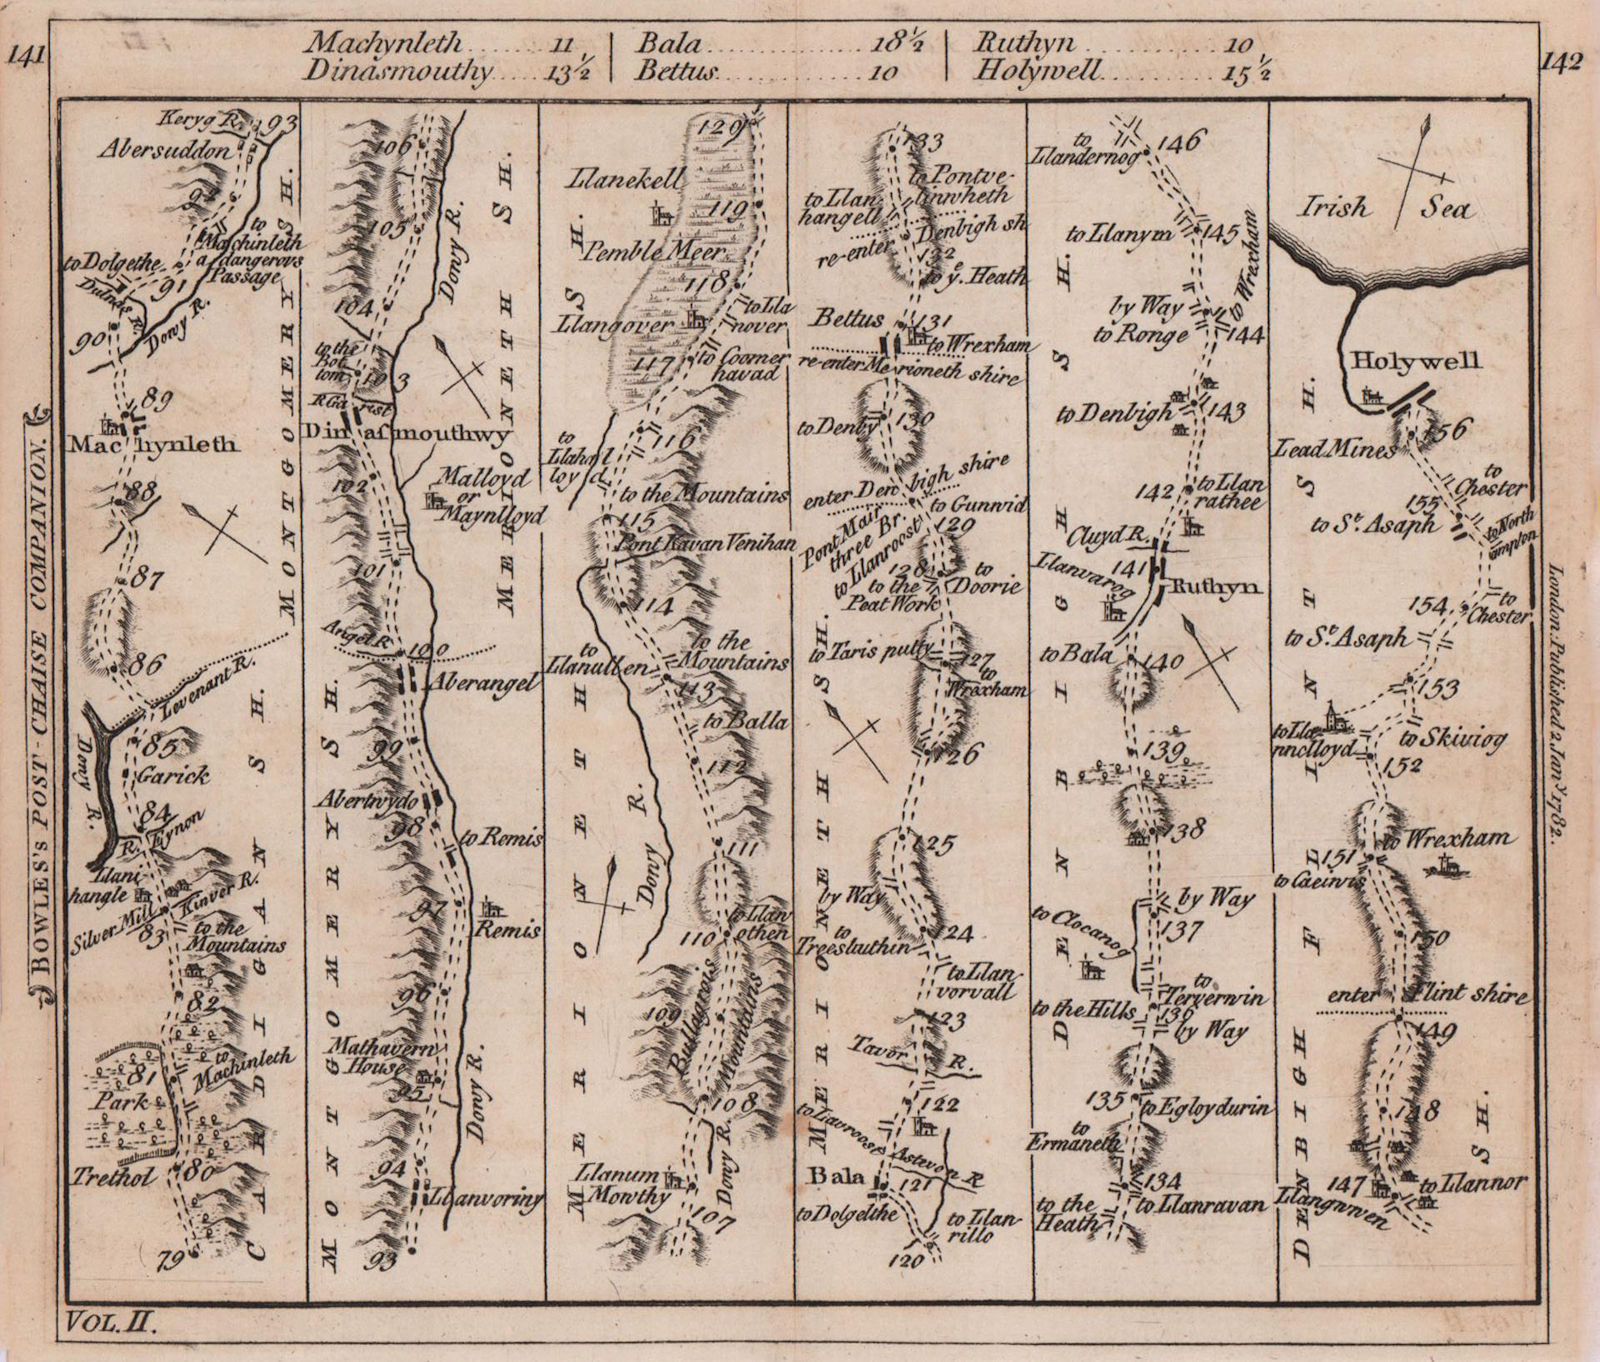 Associate Product Machynlleth-Bala-Betws Gwerfil-Ruthin-Holywell road strip map. BOWLES 1782